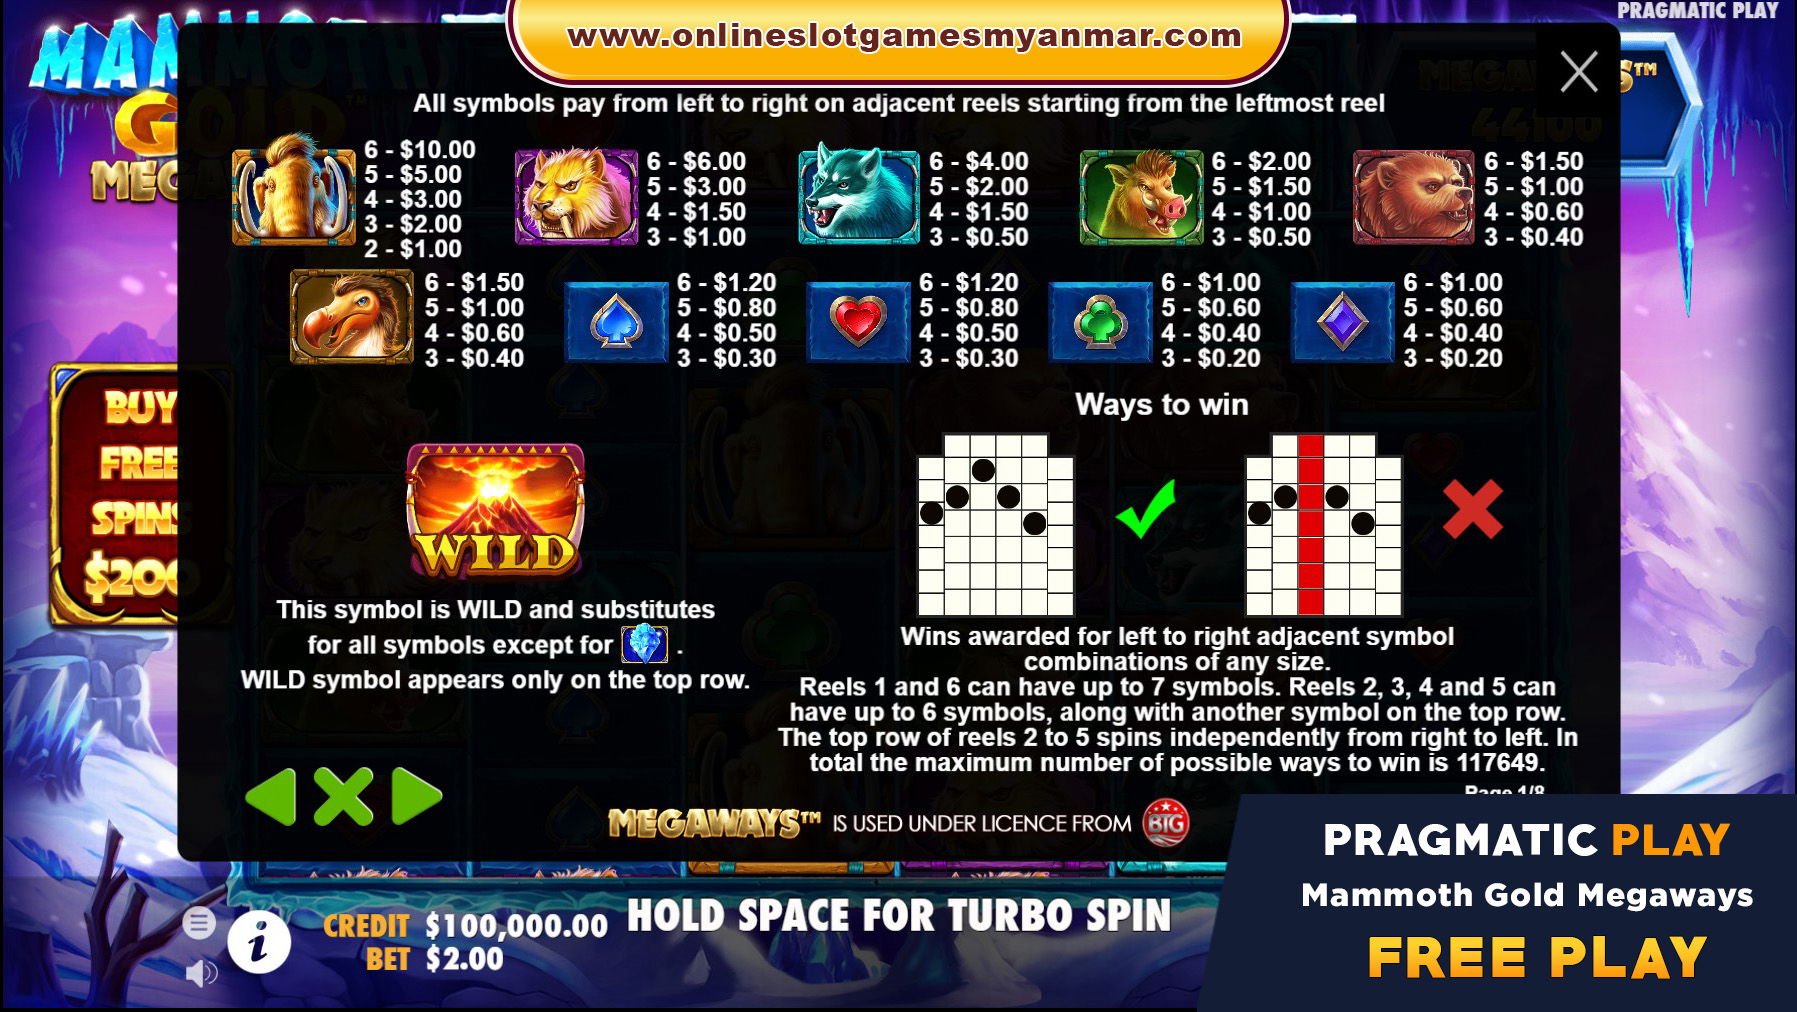 Pragmatic Play Slot Game - Mammoth Gold Megaways Payout